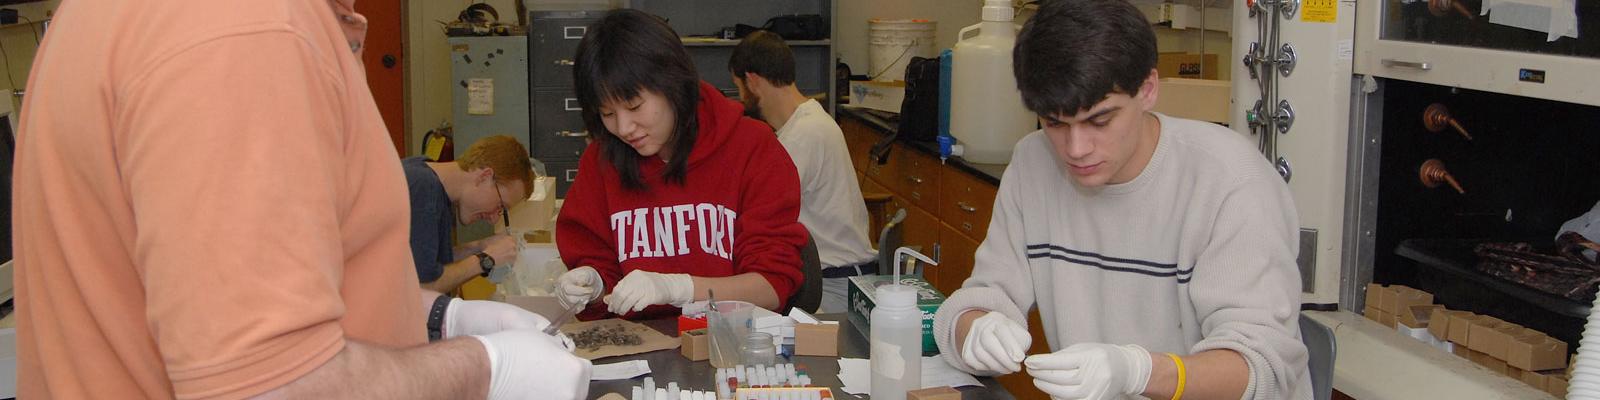 Students in the bio lab preparing specimens 